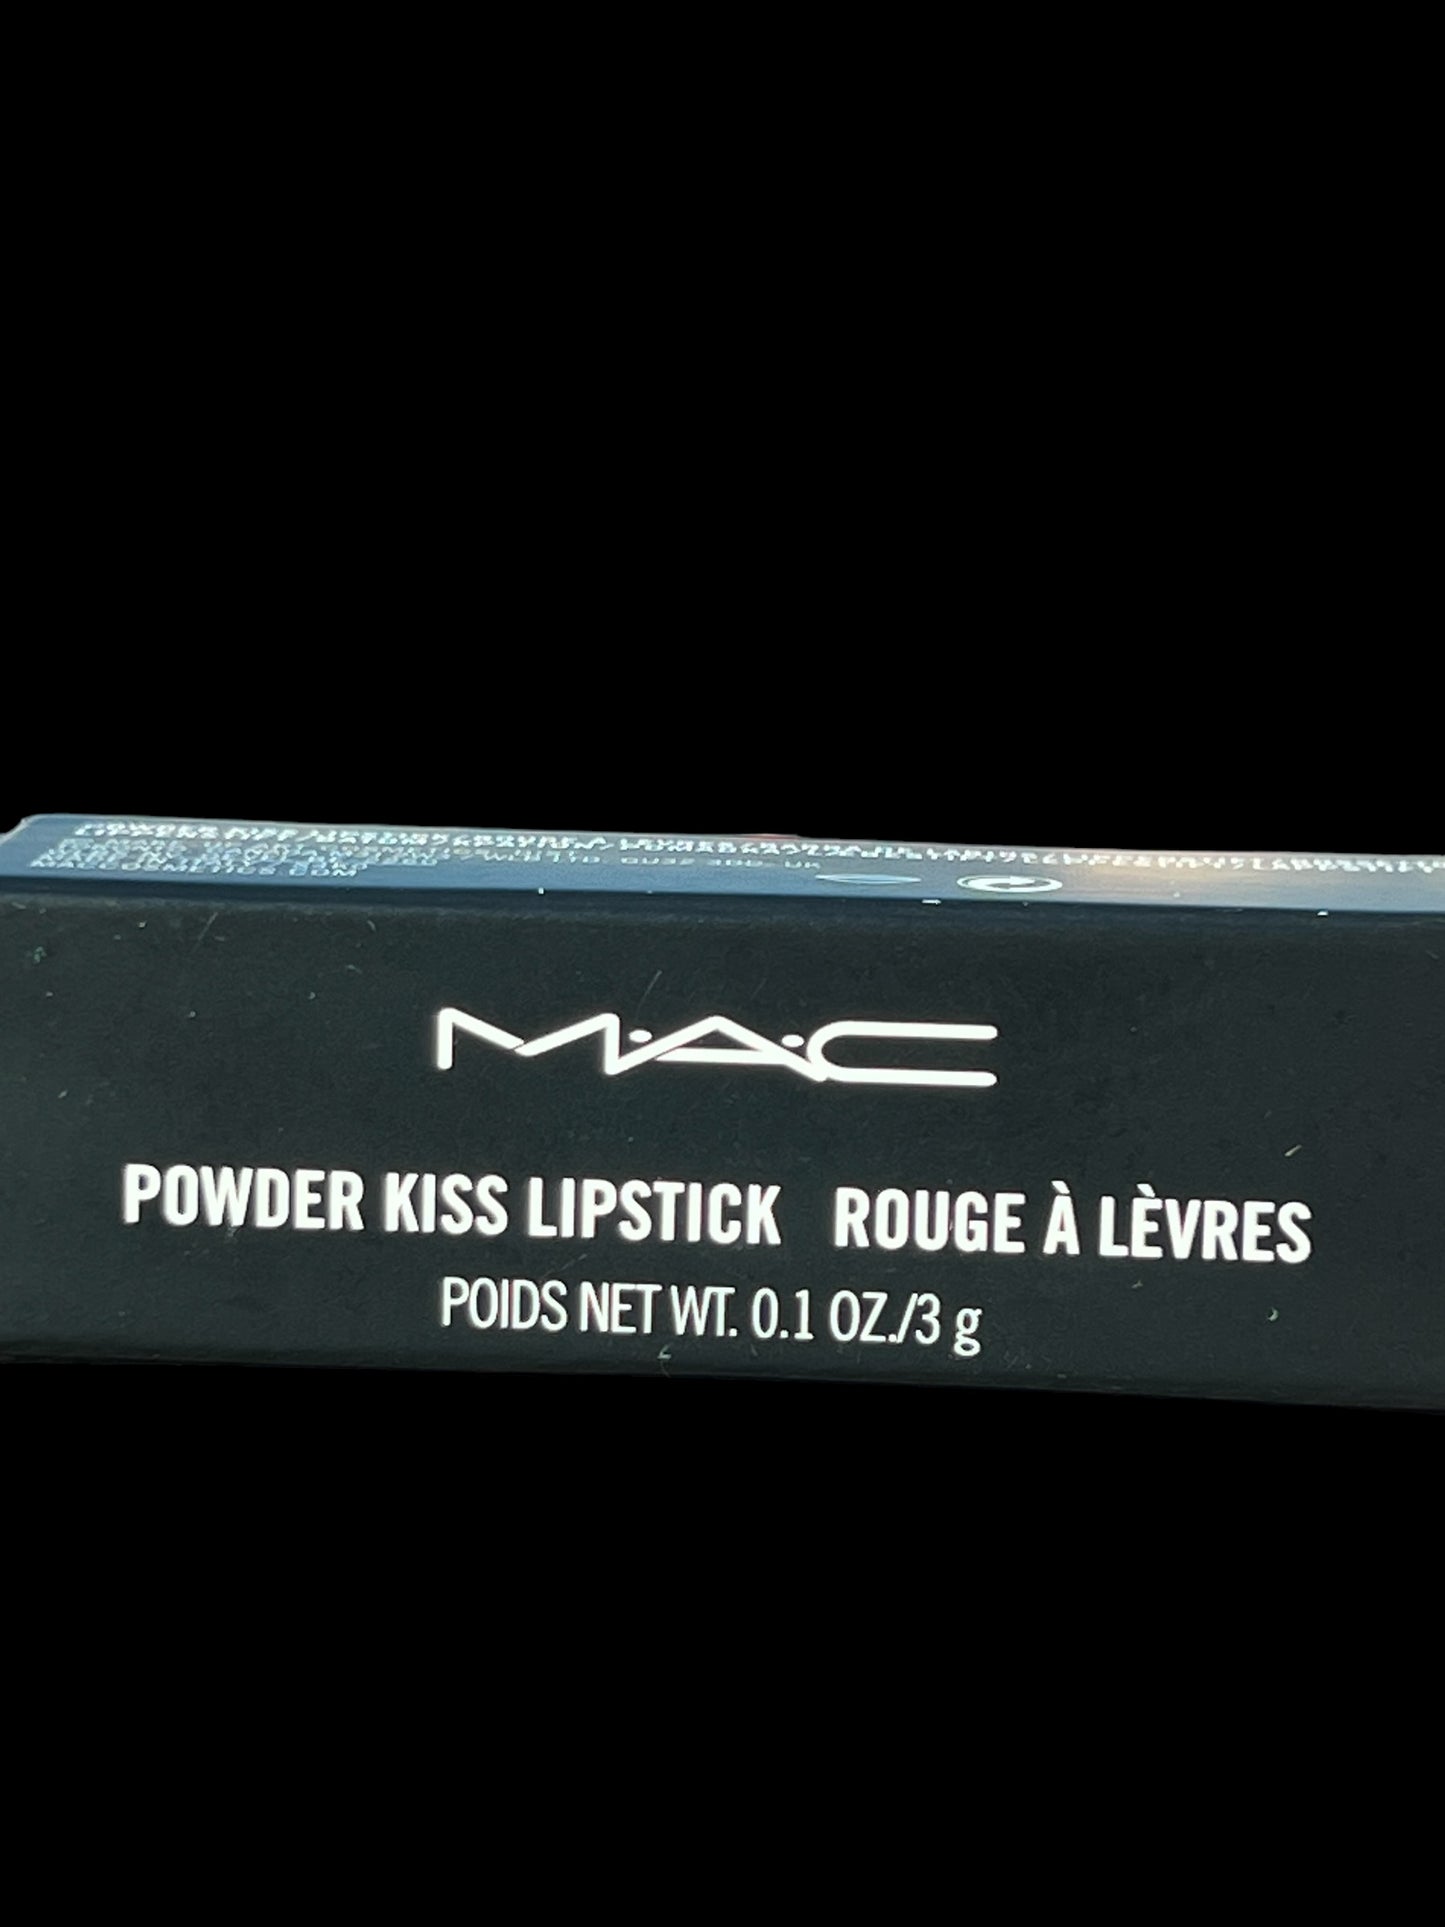 MAC POWDER KISS Lipstick in DEVOTED TO CHILI